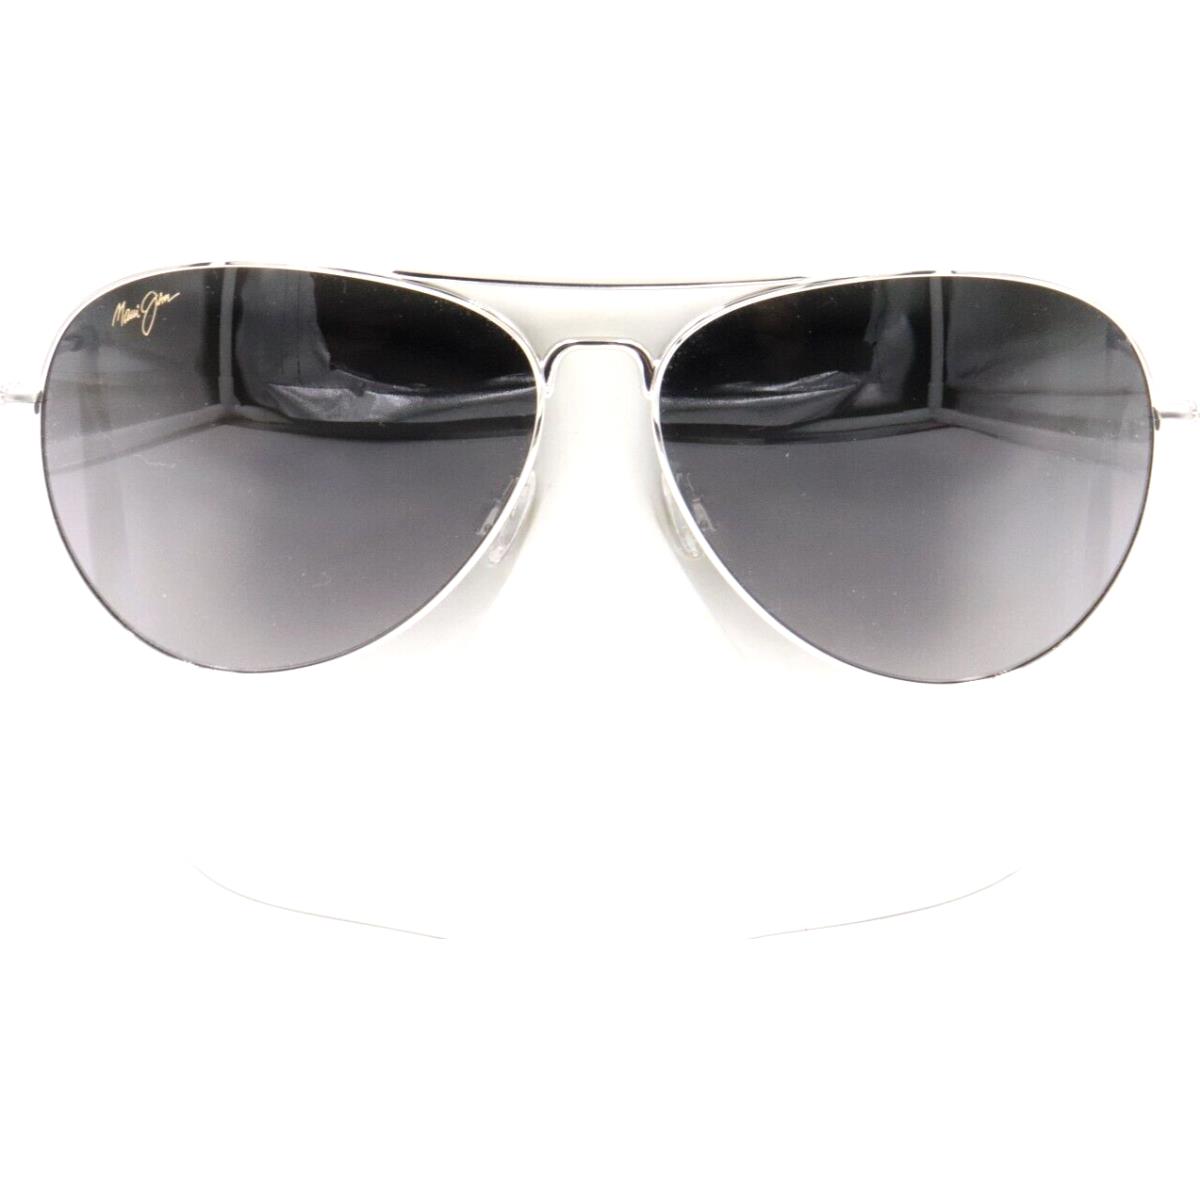 Maui Jim Silver Mavericks Neutral Gray Aviator Sunglasses GS264-17